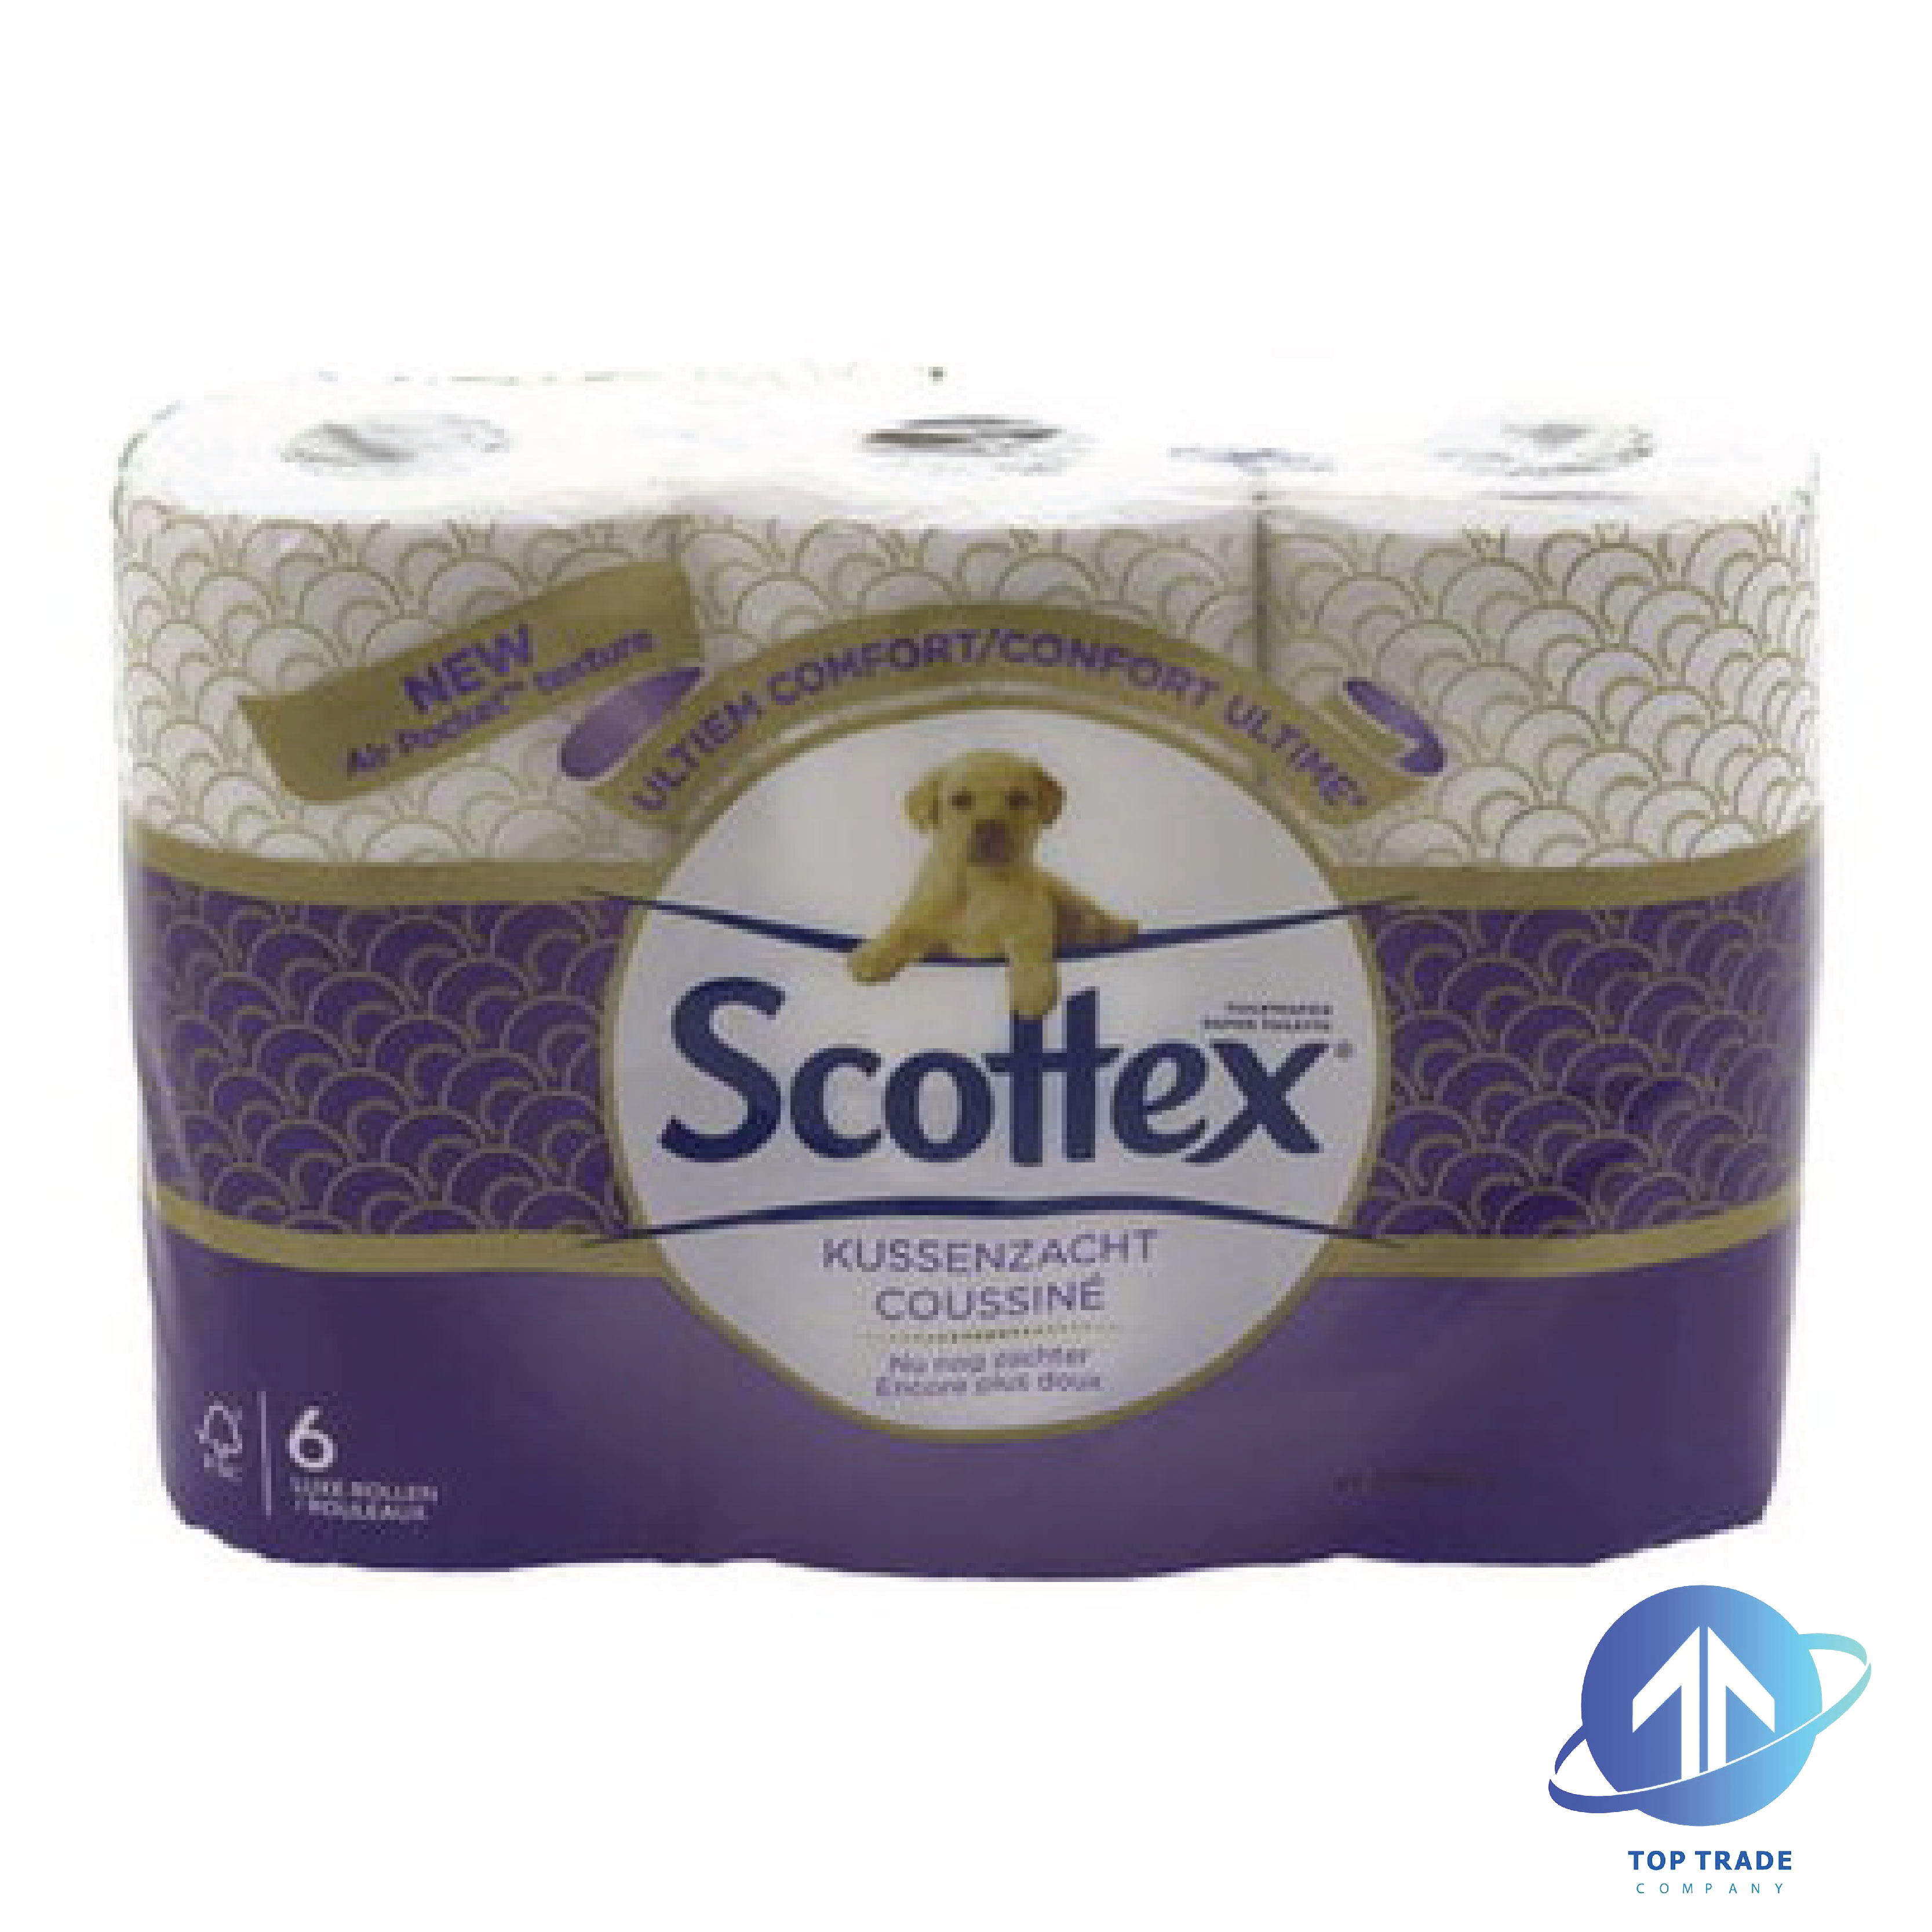 Scottex cushion soft toilet paper 6 rolls 3 layers